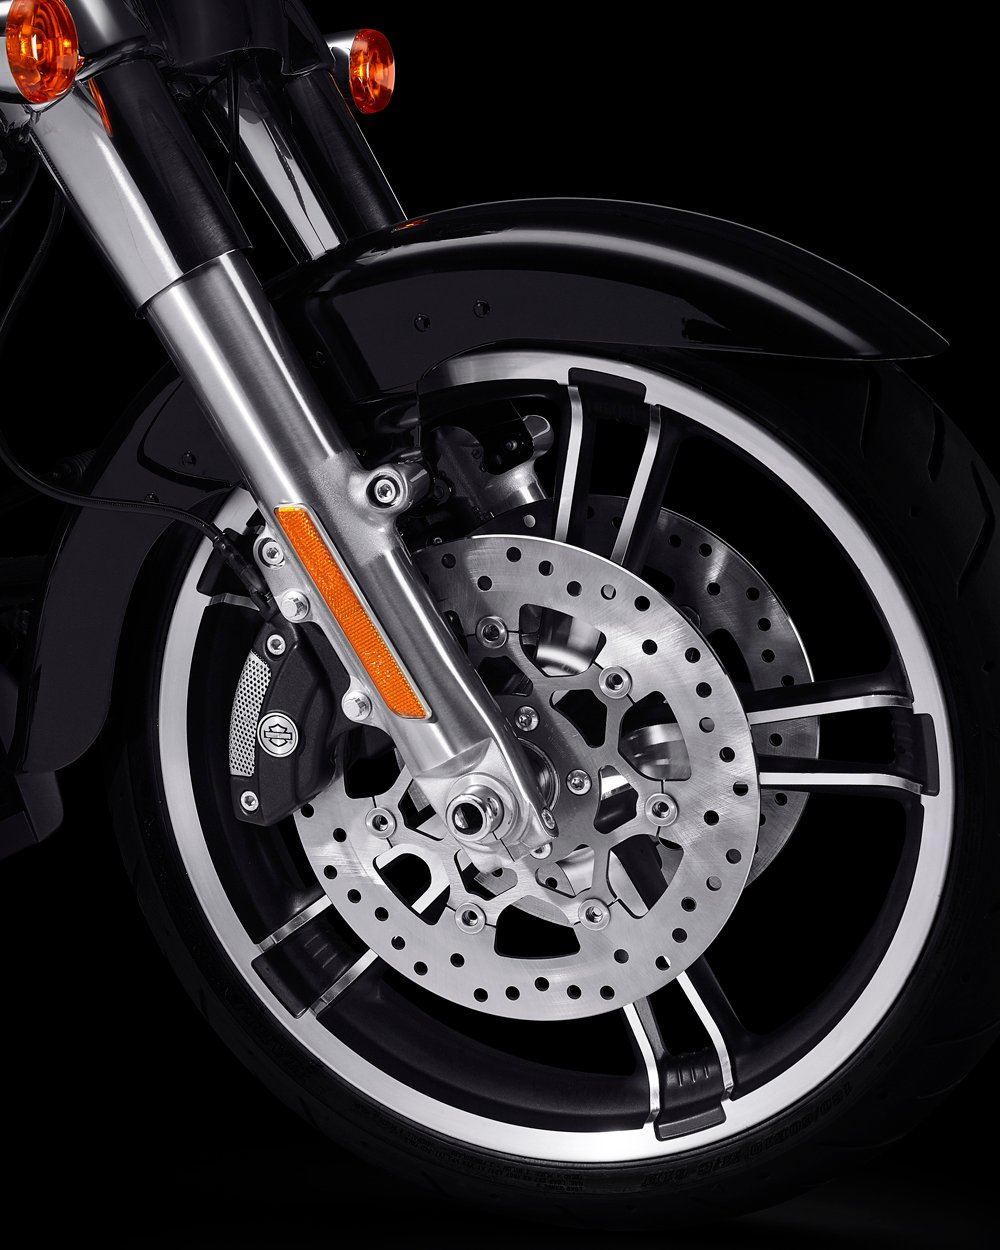 Enforcer Cast Aluminum Wheels on a 2022 Freewheeler motorcycle